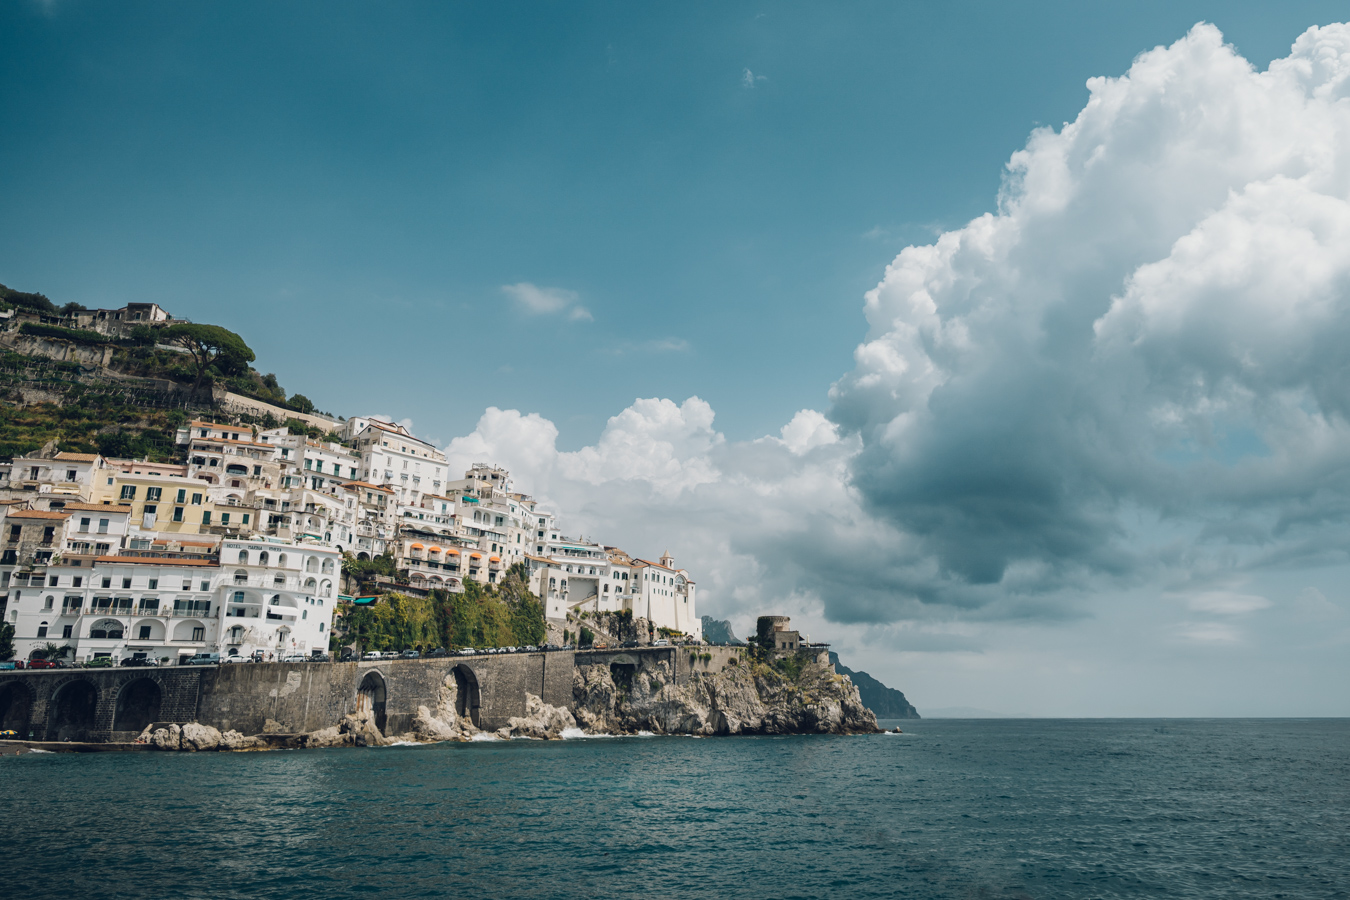 Photograph of Amalfi, Amalfi Coast, Italy by Alex Nichol